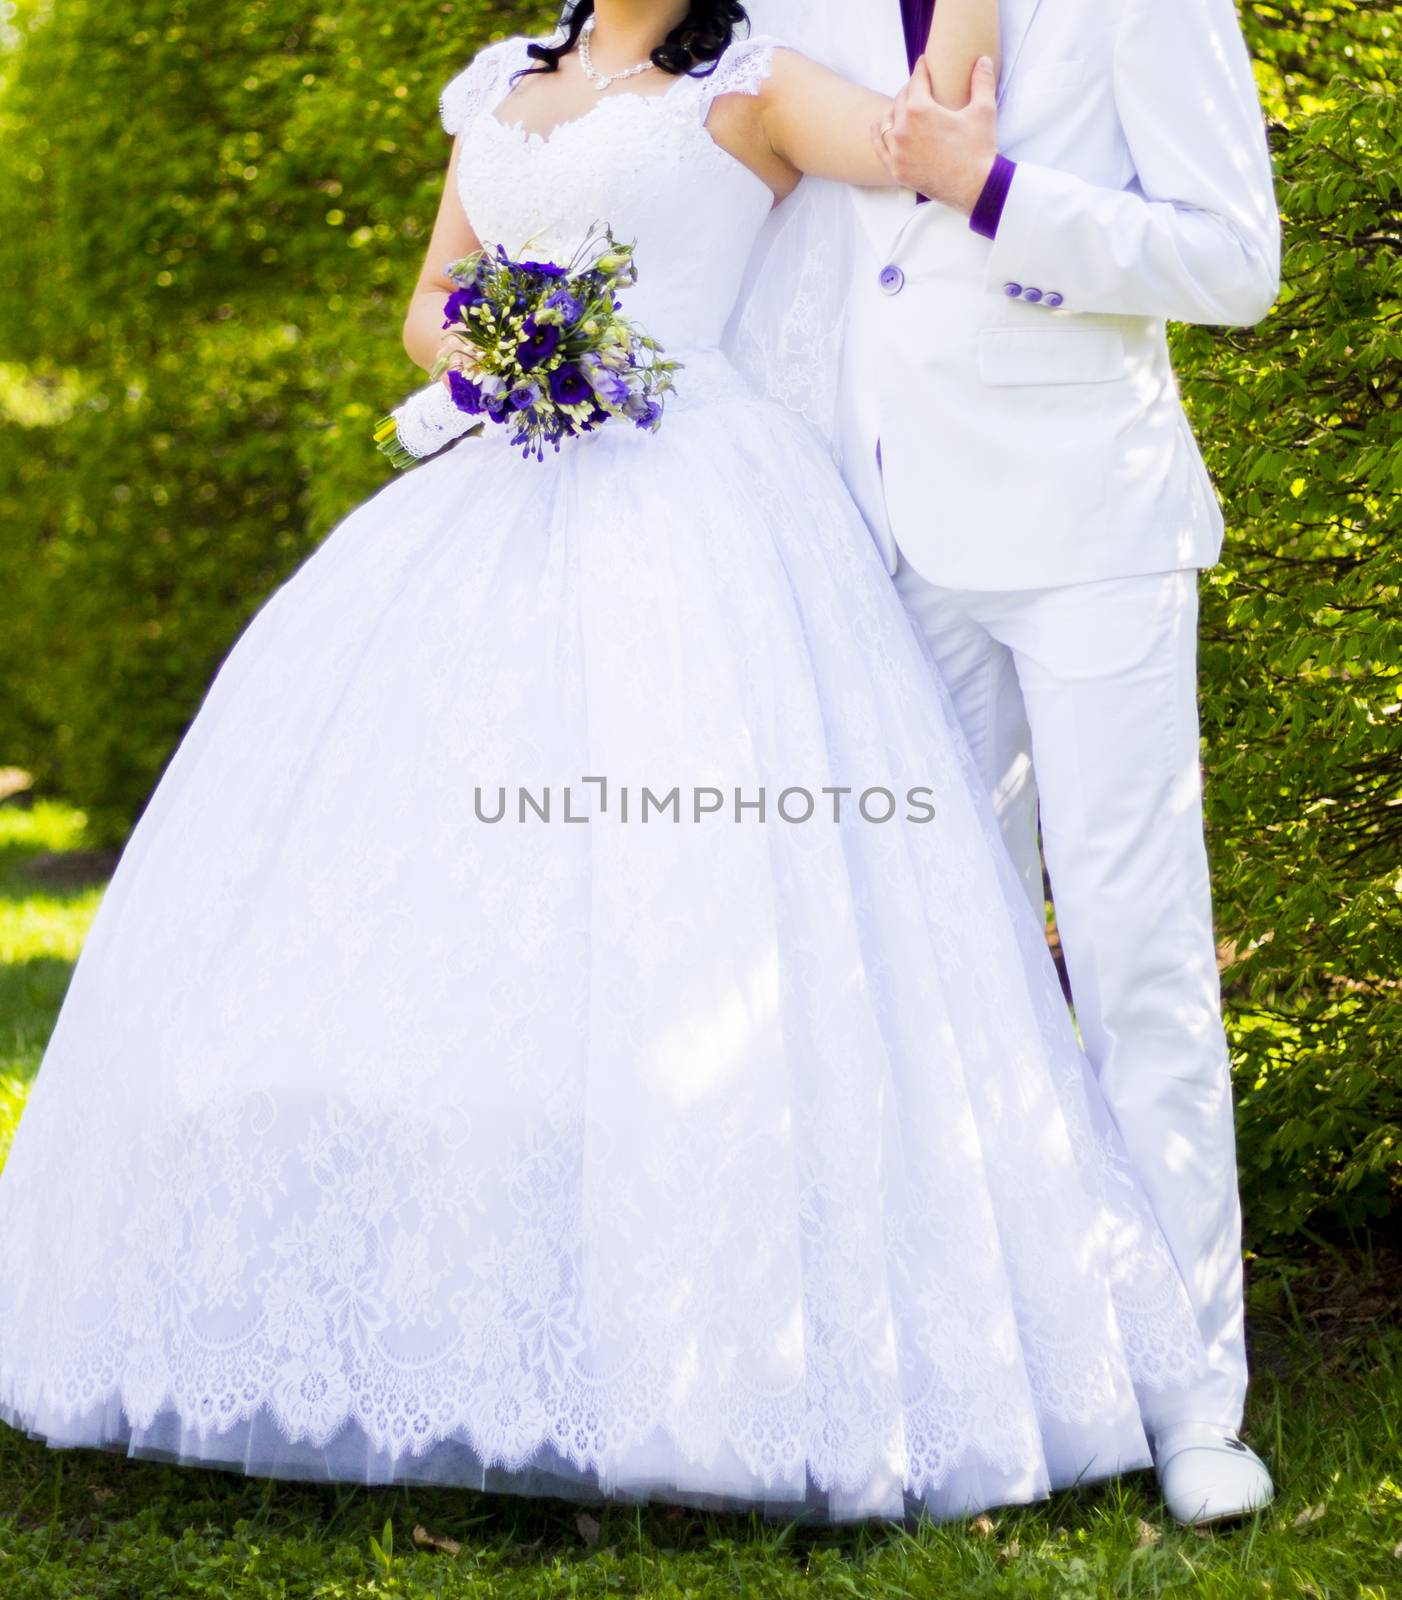 Elegant bride and groom posing together outdoors on a wedding da by serhii_lohvyniuk